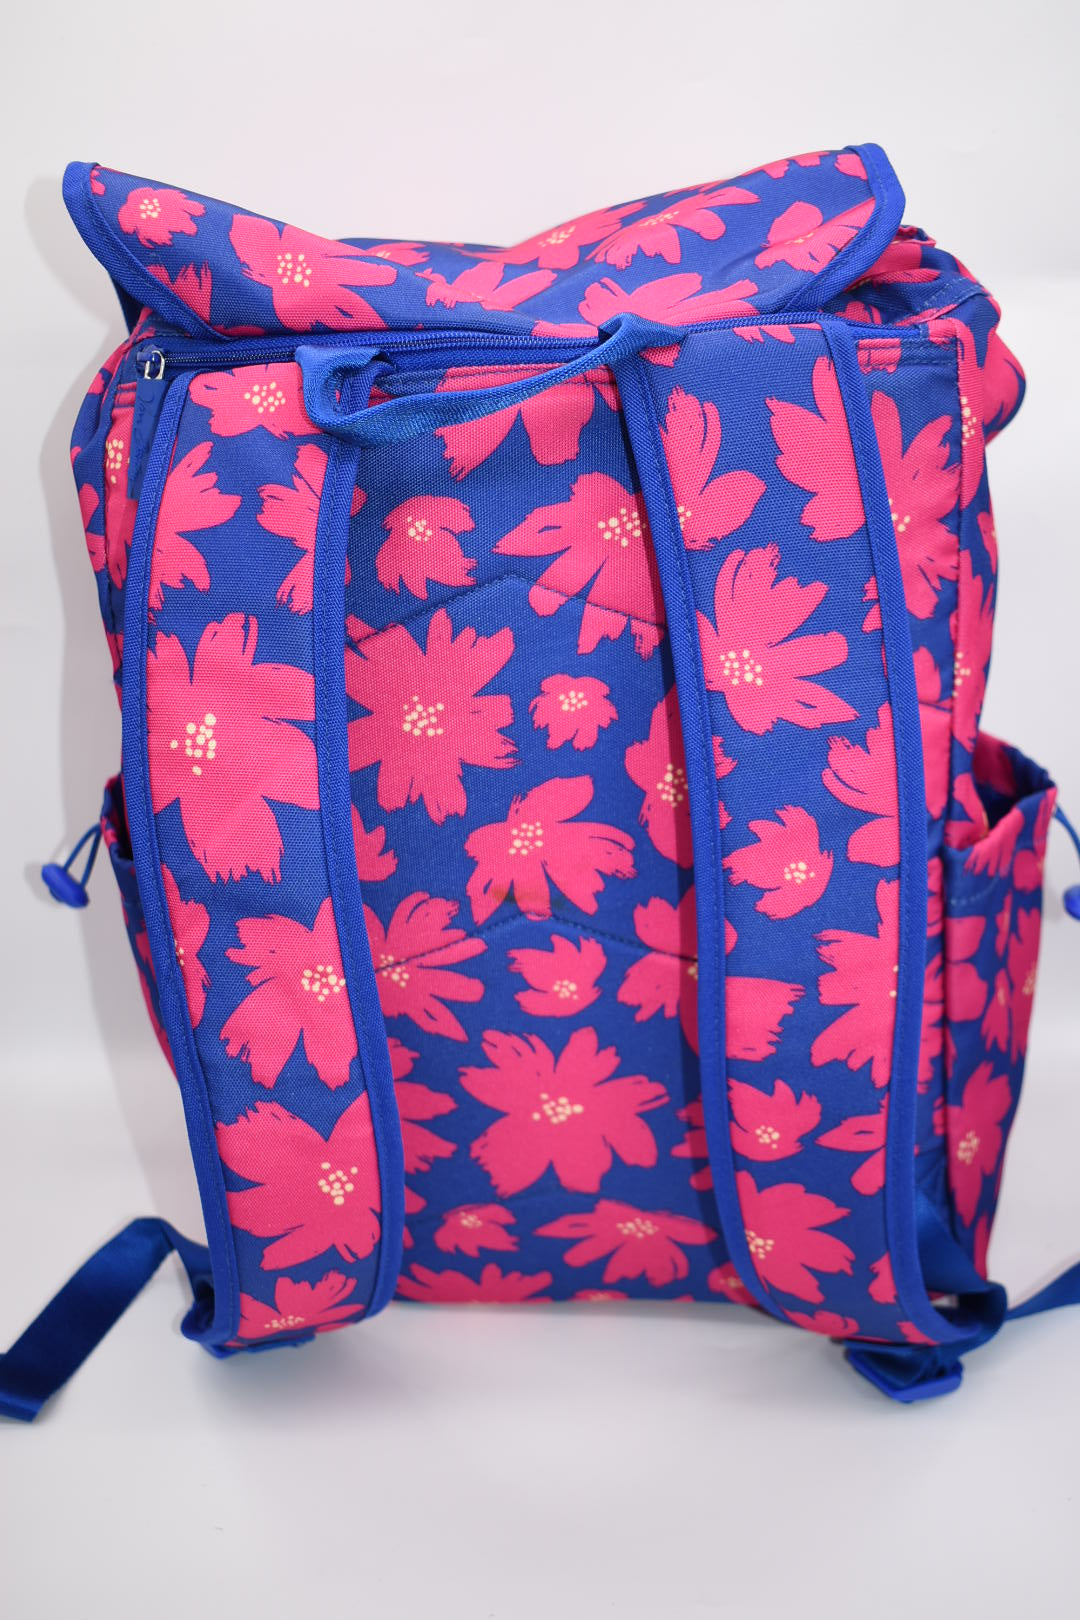 Vera Bradley "Art Poppies" Lighten Up Drawstring Backpack